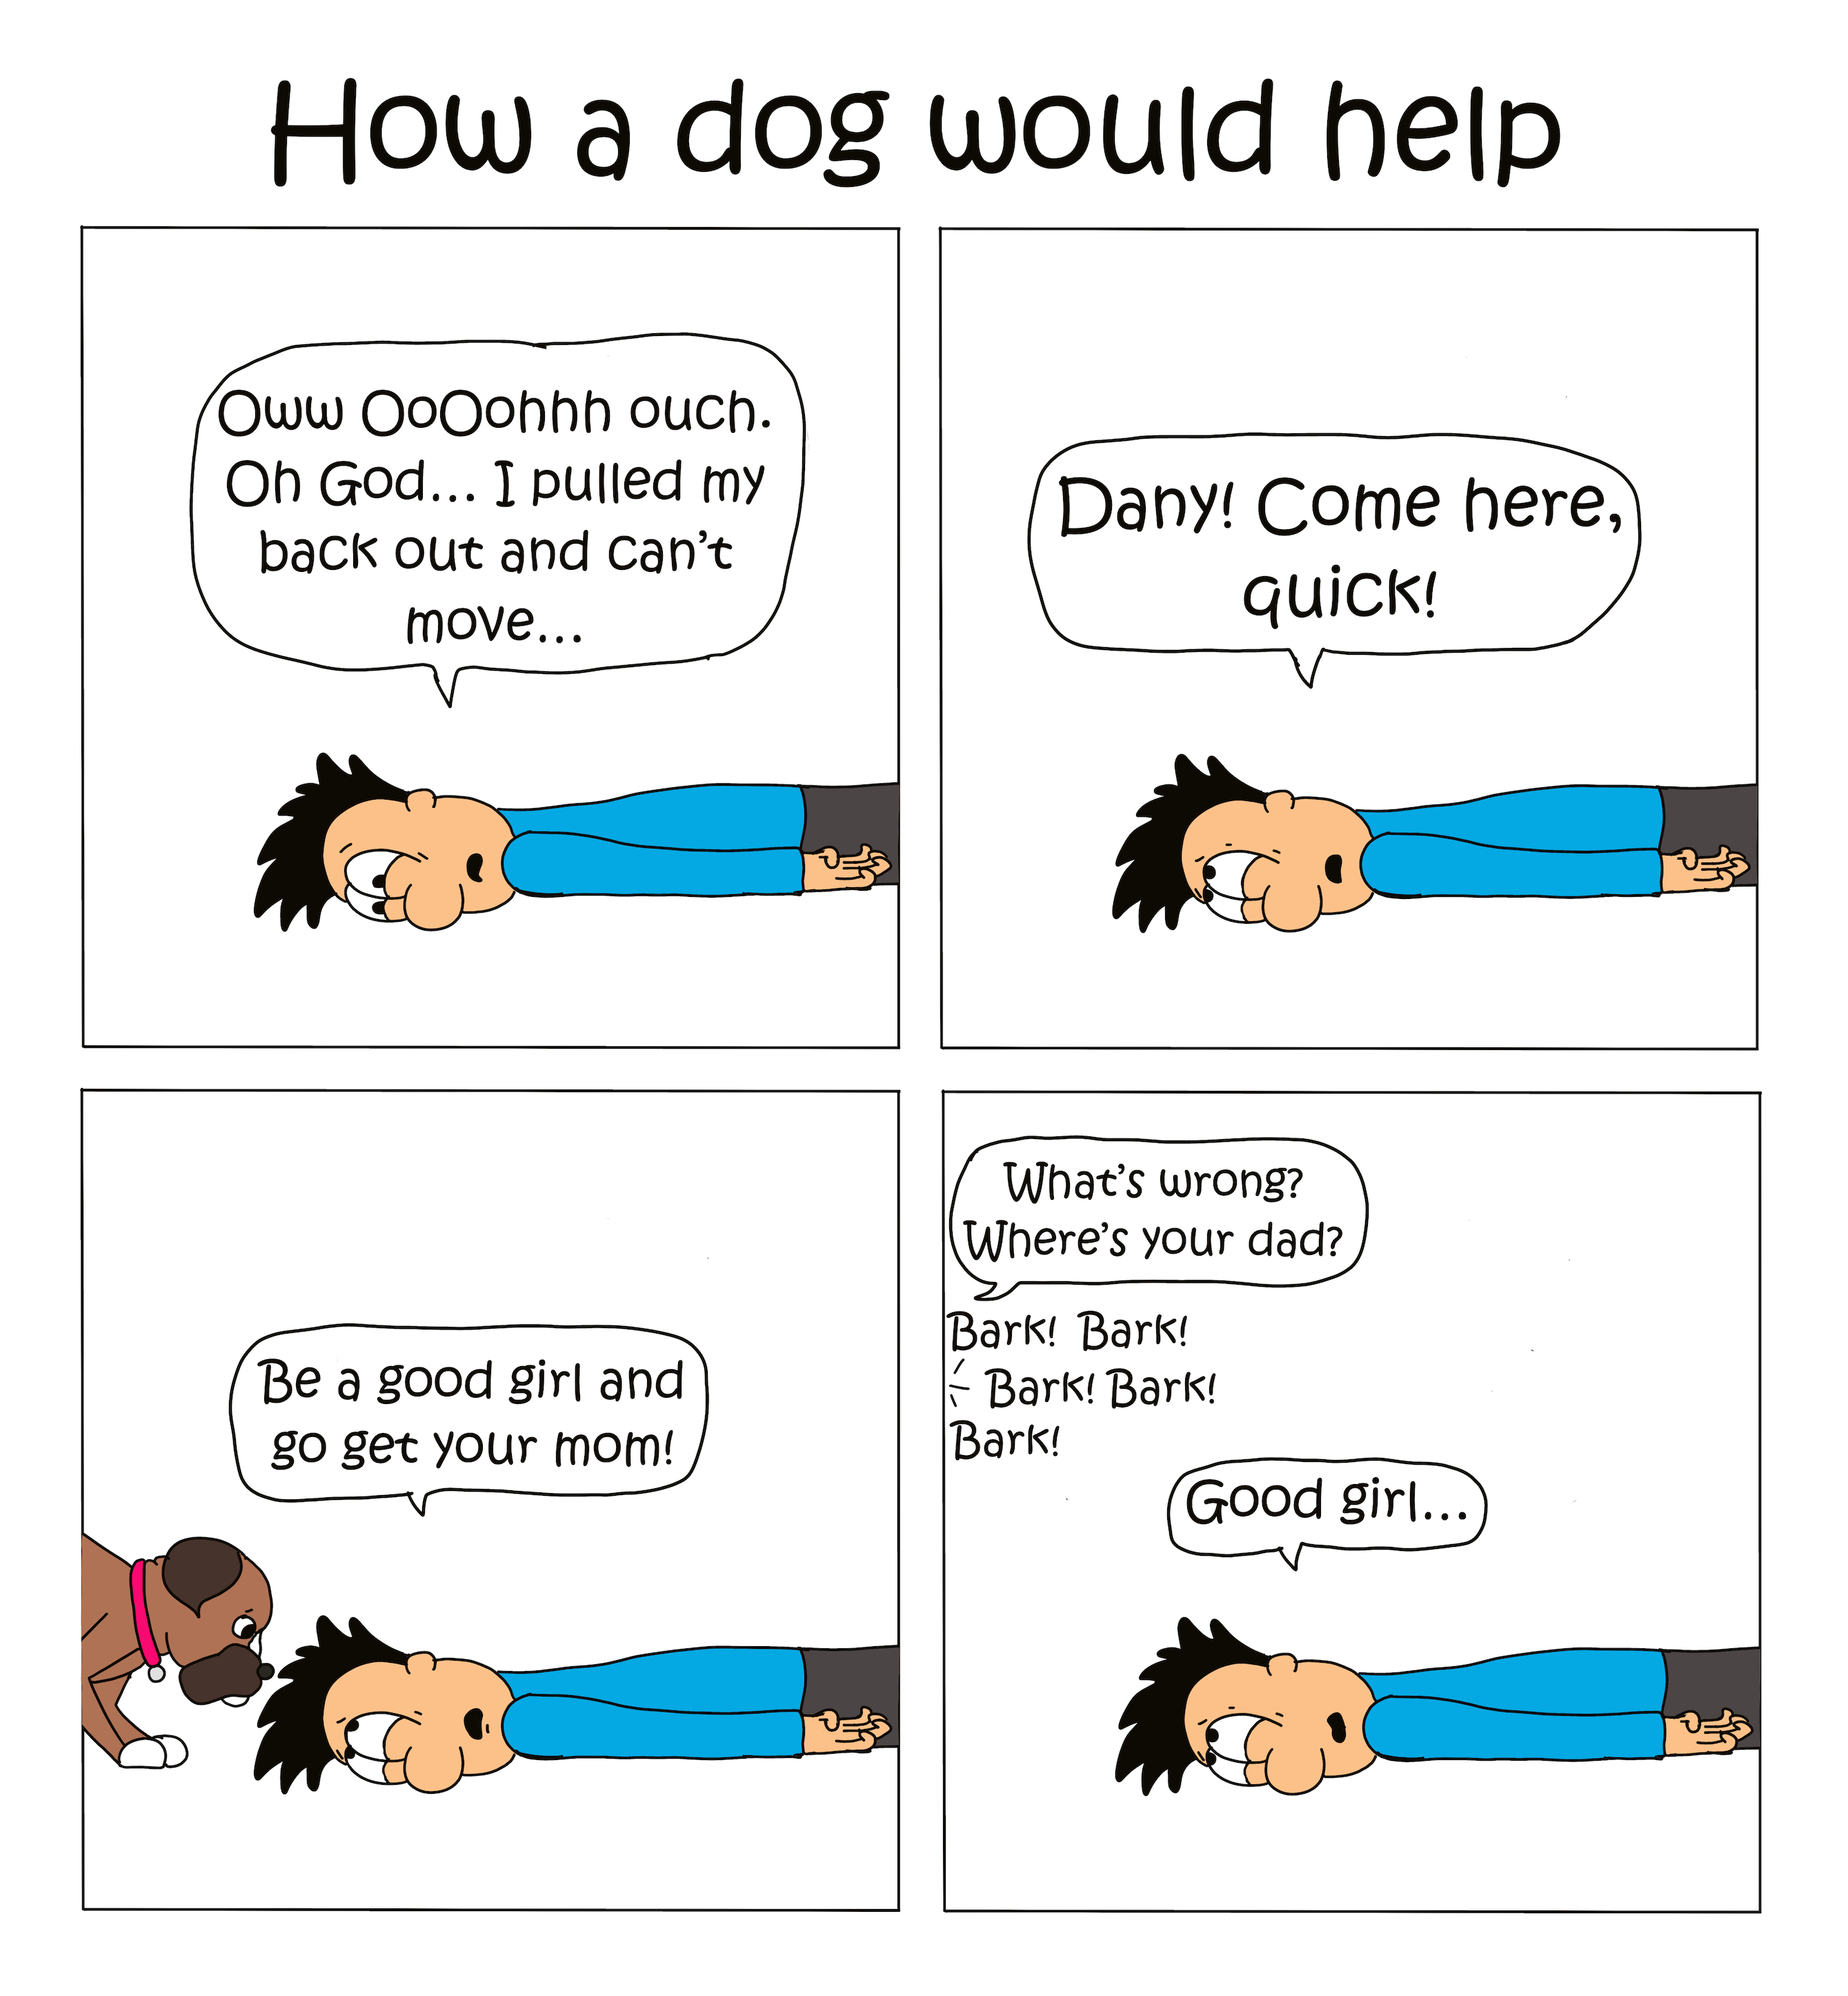 How a dog would help if I hurt myself comic